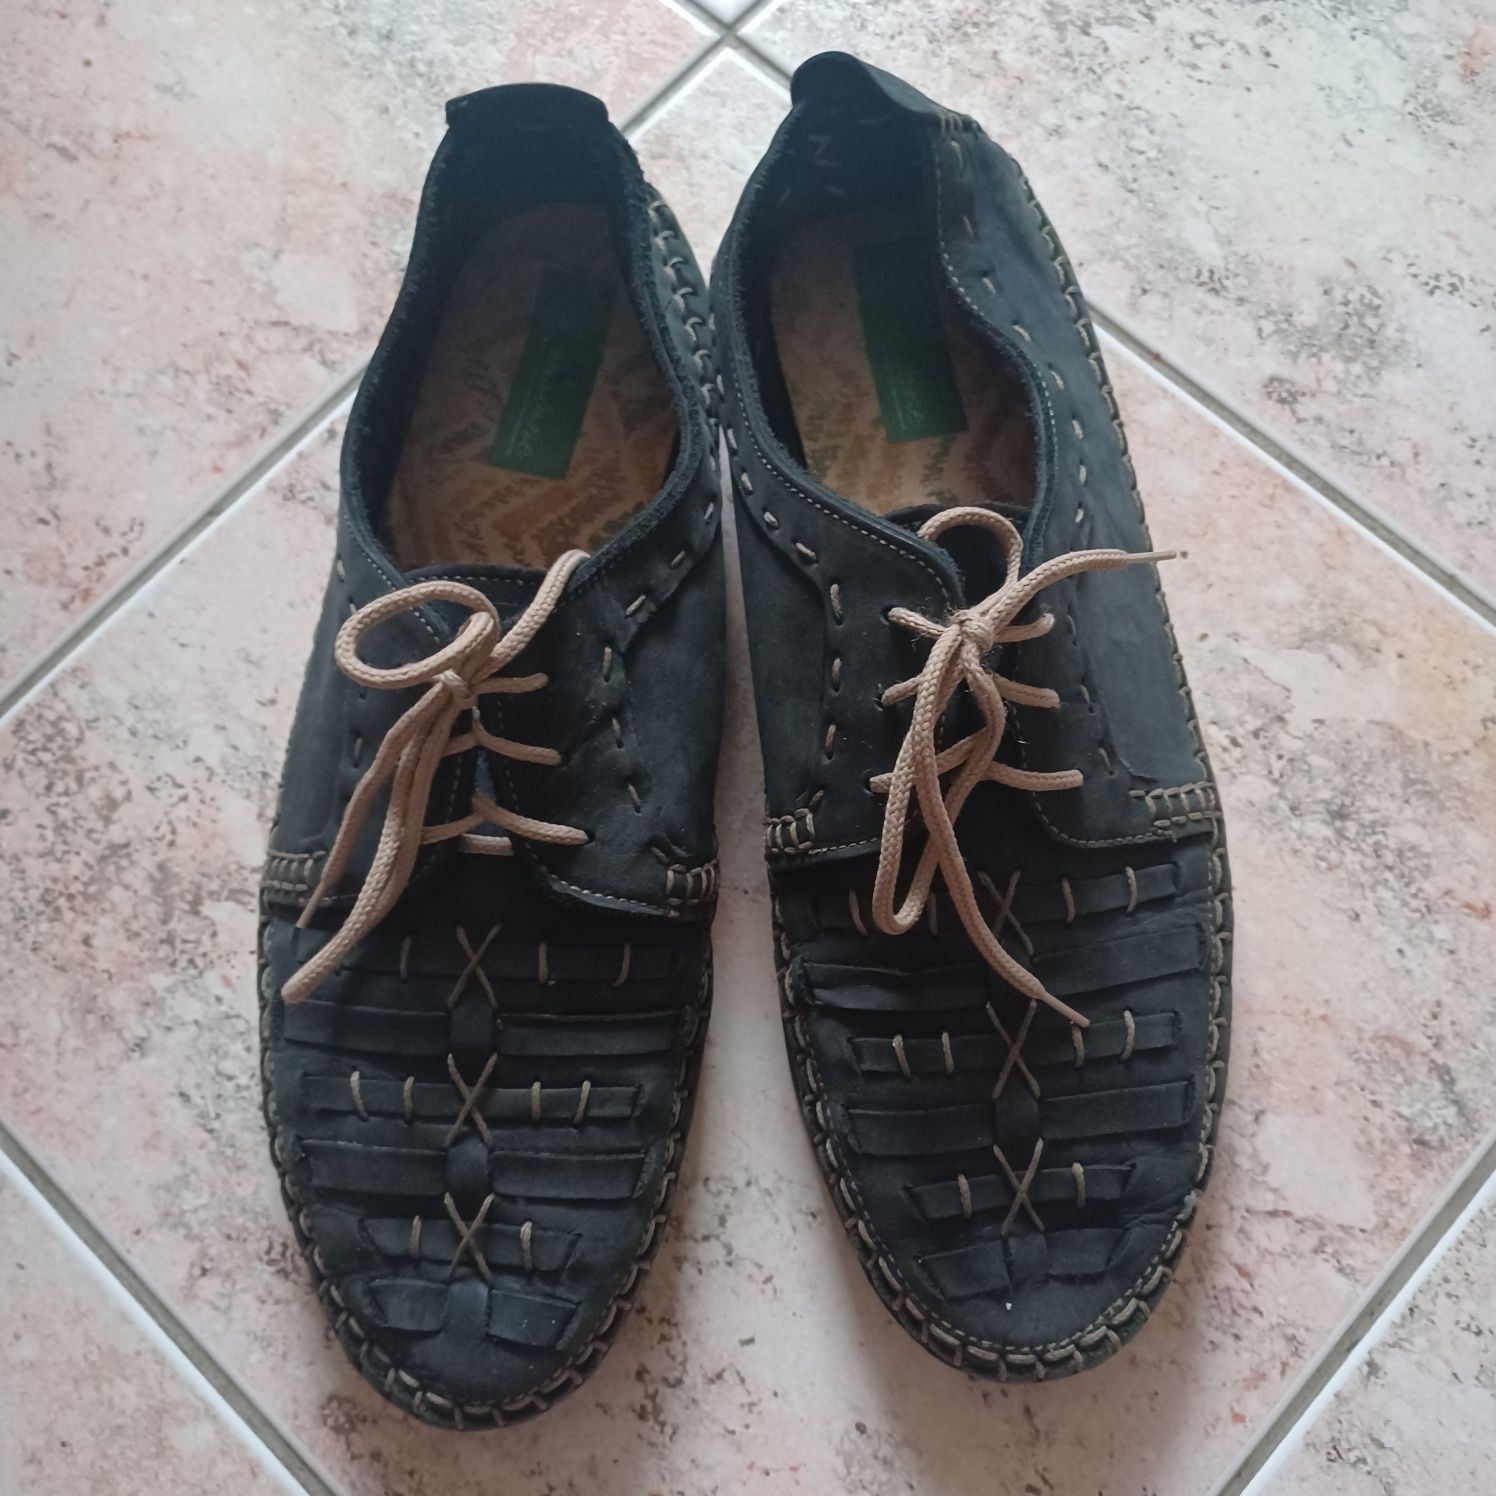 Buty włoskie skórzane z miękkiej skóry naturalnej 44